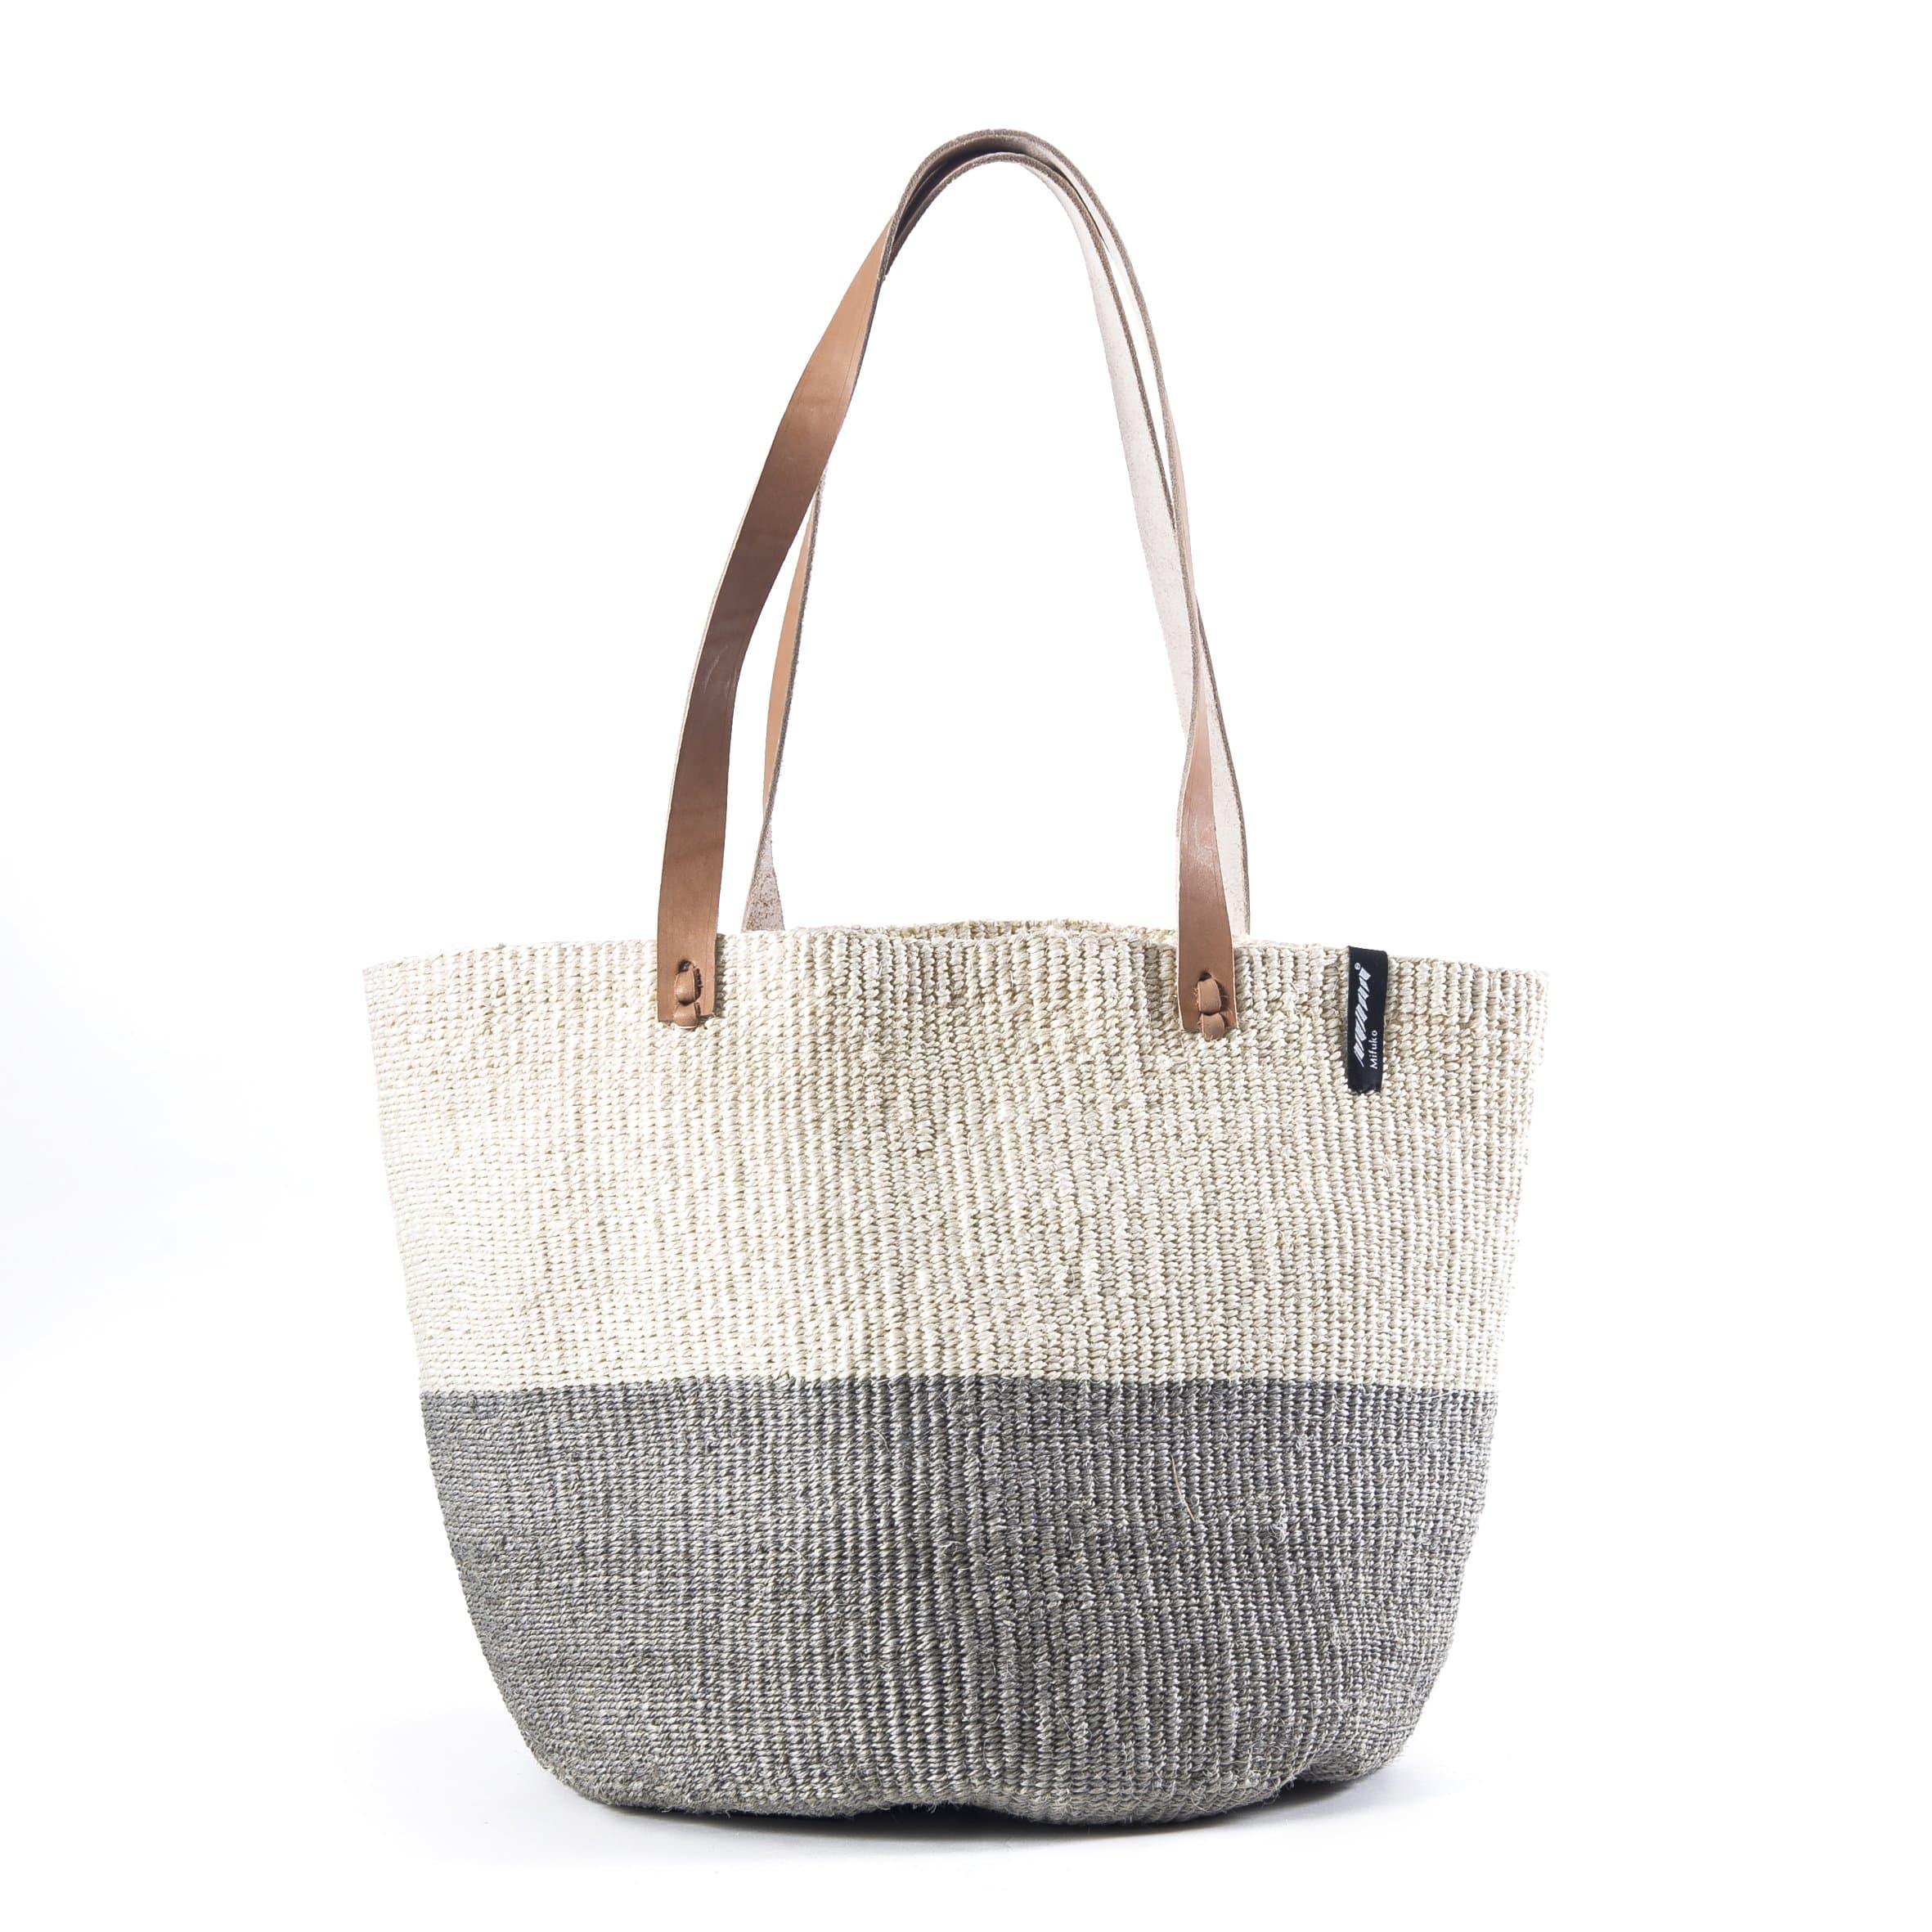 Handmade fair trade Sisal Kiondo shopper basket | Natural and light grey duo M